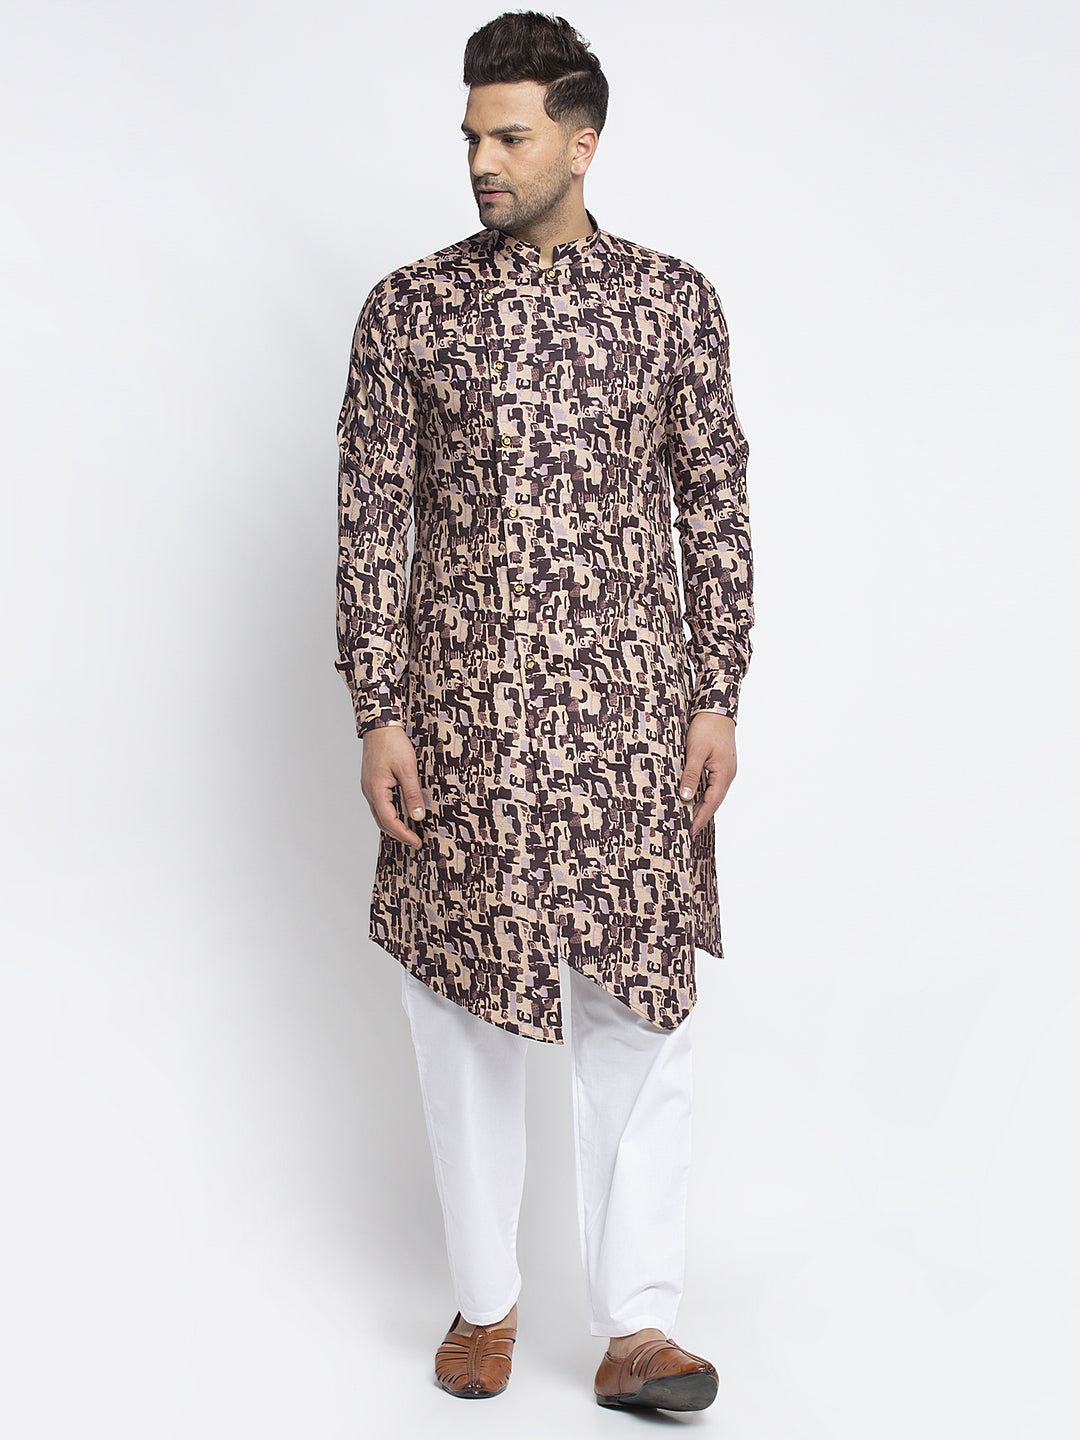 Designer Cotton Brown Block Printed Kurta With Aligarh Pajama Set For Men By Treemoda